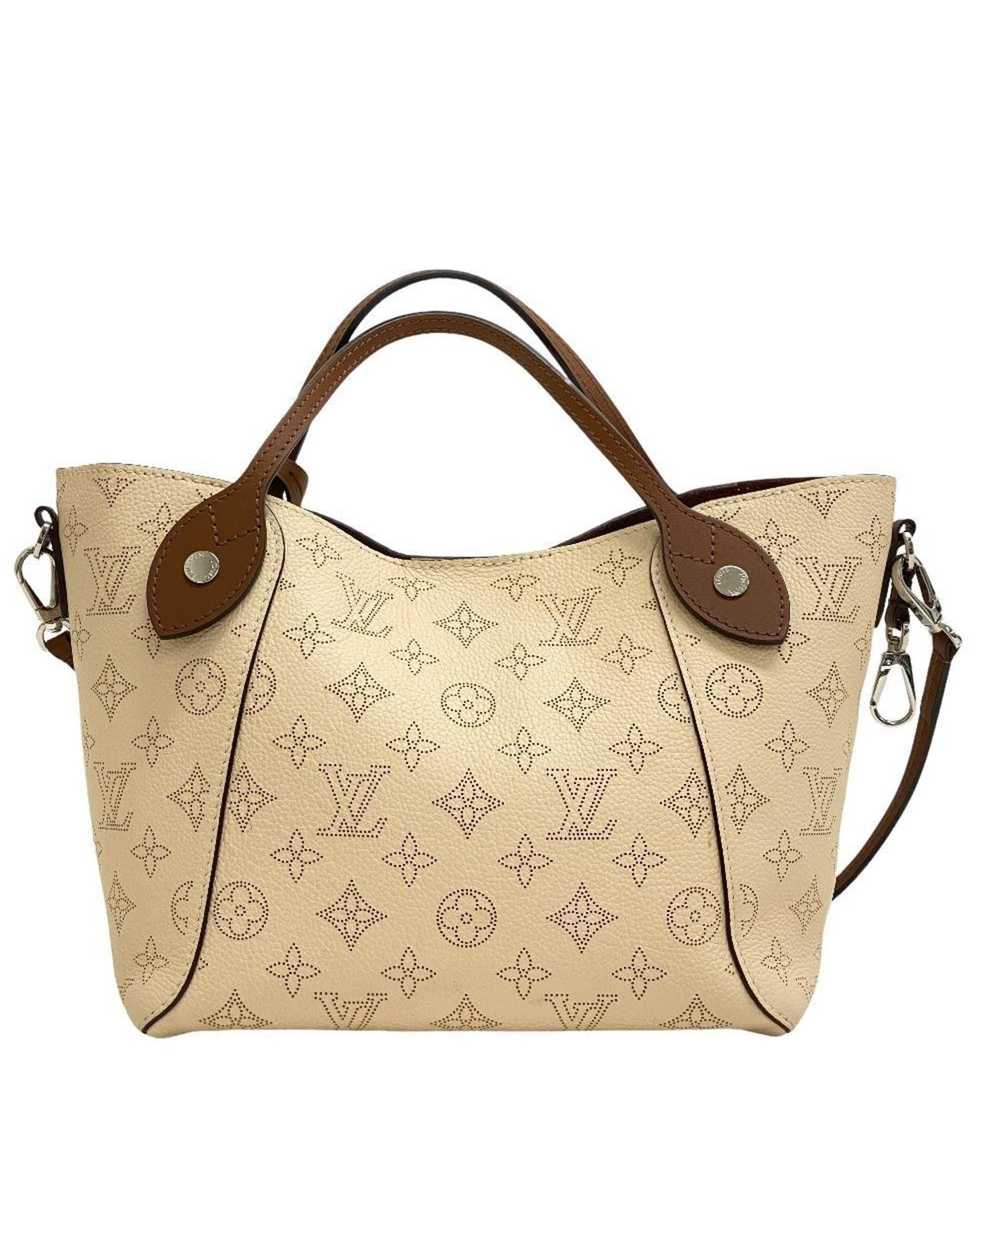 Louis Vuitton Elegant Beige Leather 2-Way Bag wit… - image 2